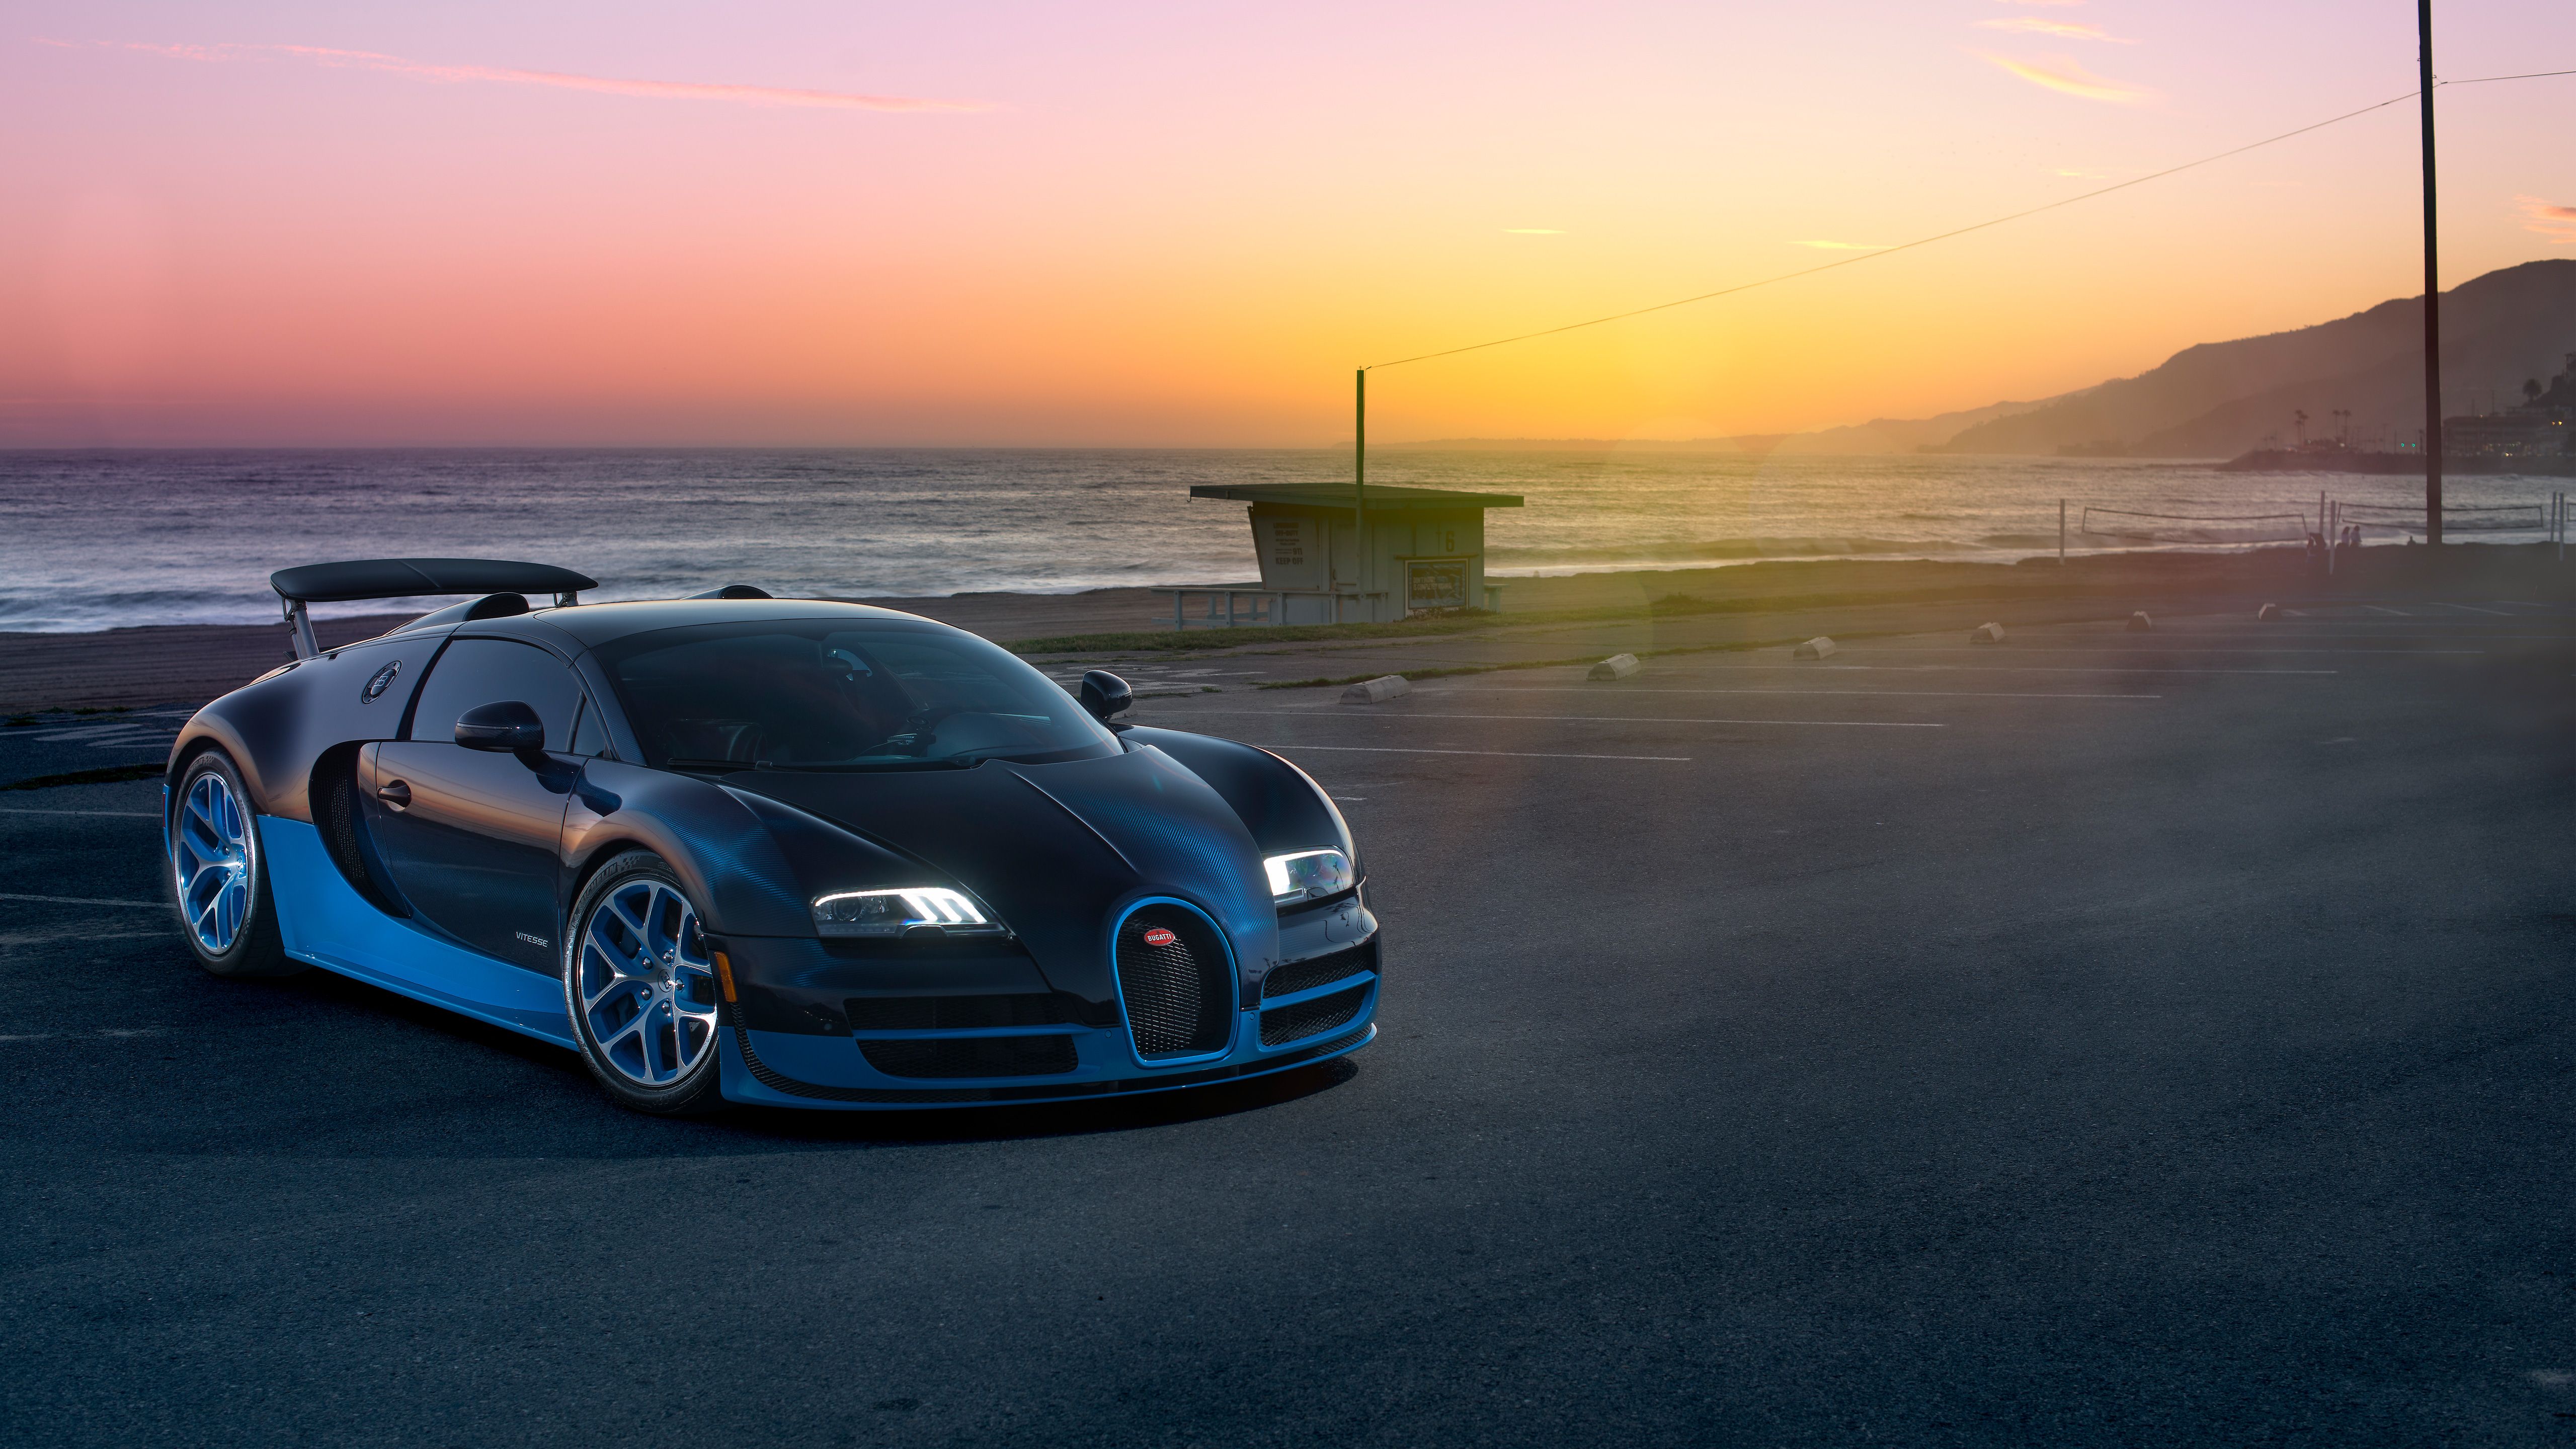 Bugatti Wallpapers [HD] • Download Bugatti Cars Wallpapers - DriveSpark